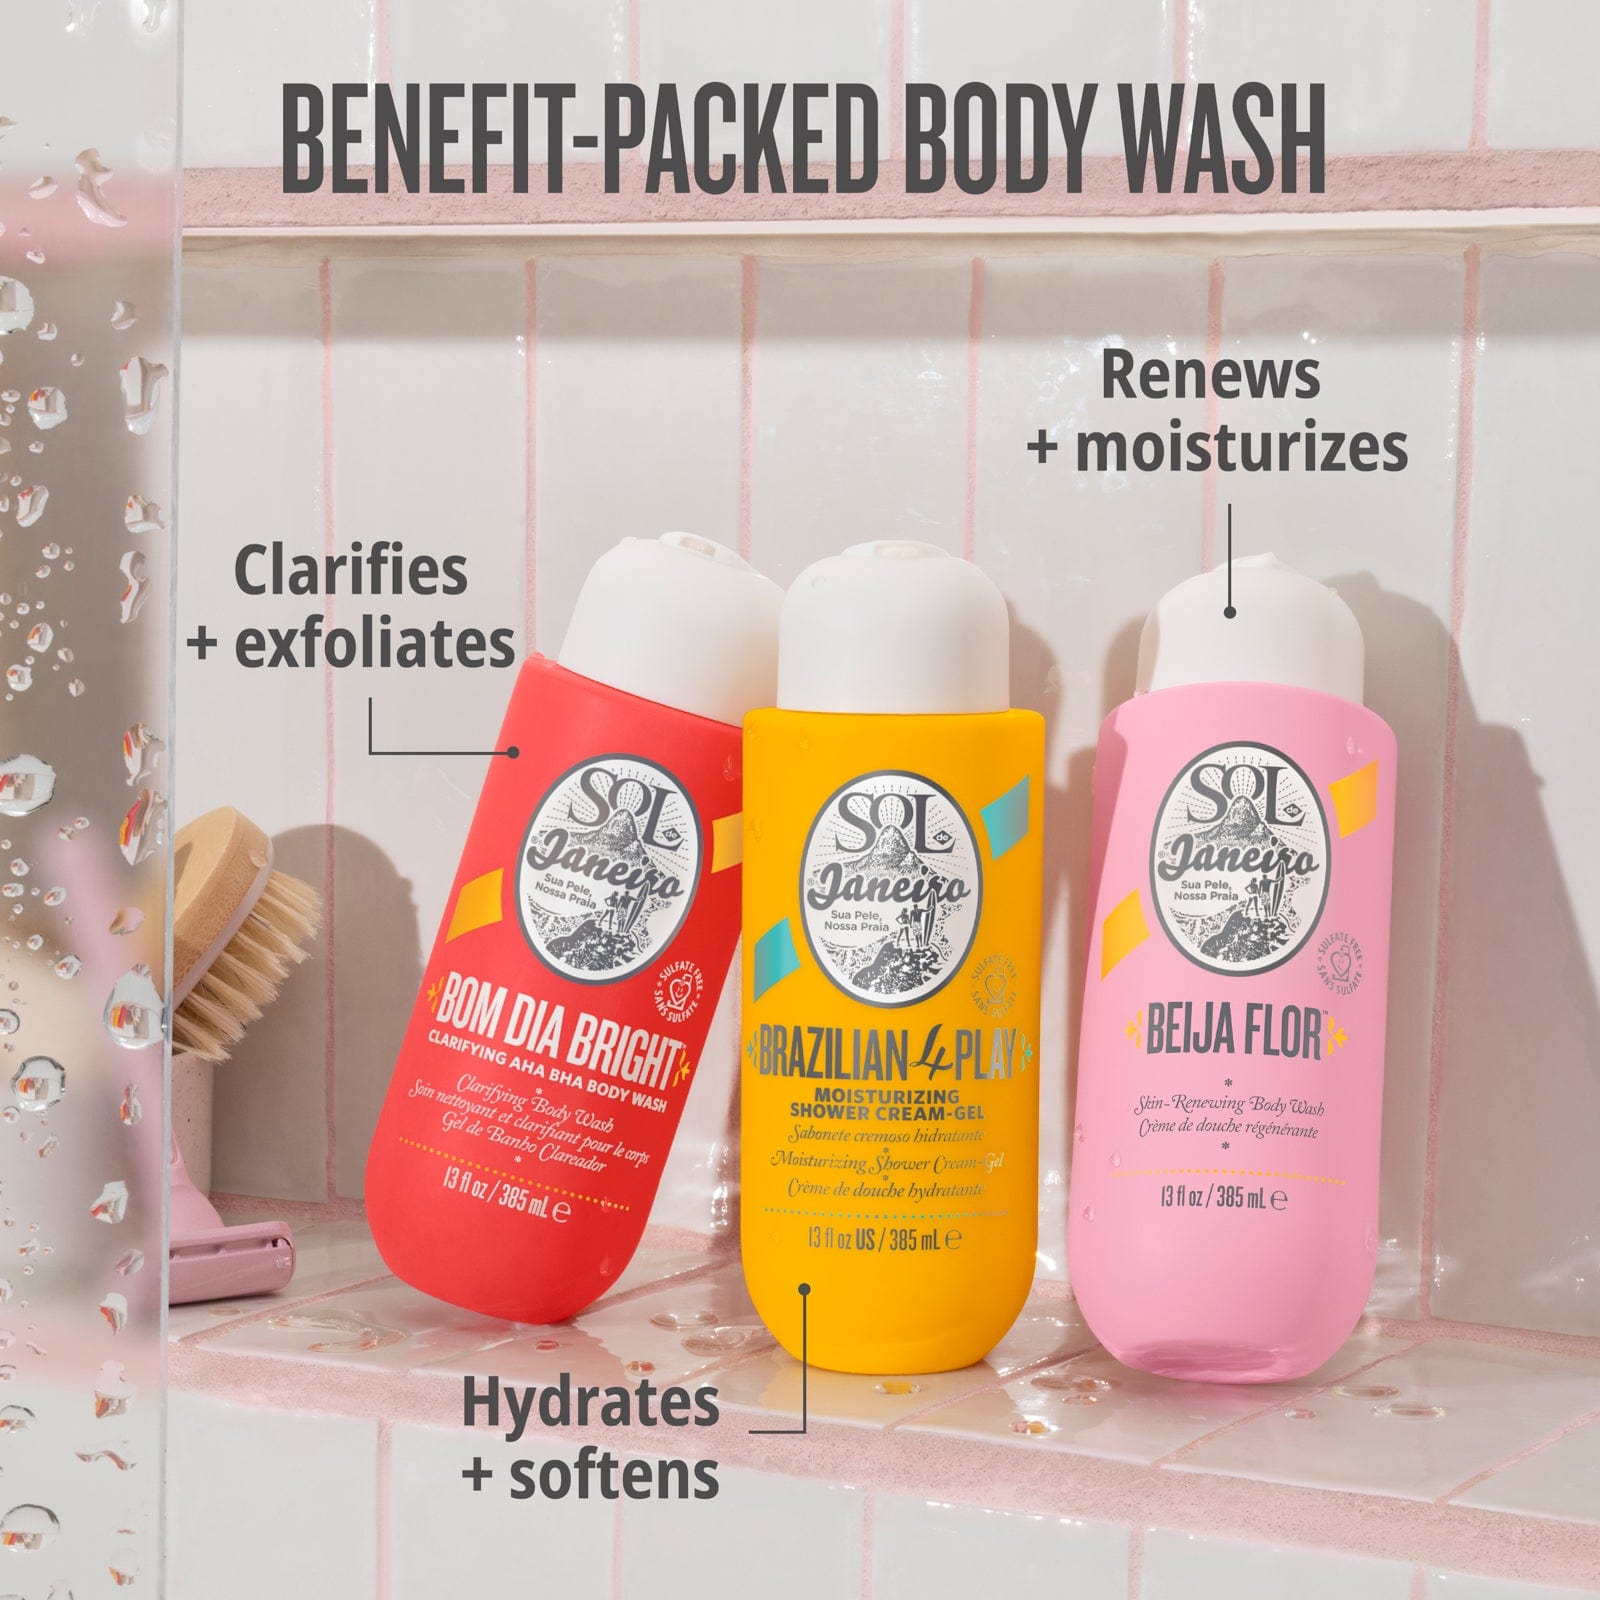 Benefit-packed body wash | Bom Dia Bright Body Wash - clarifies and exfoliates | Brazilian 4 Play Shower Cream-gel - hydrates and softens | Beija Flor Body wash - renews and moisturizes